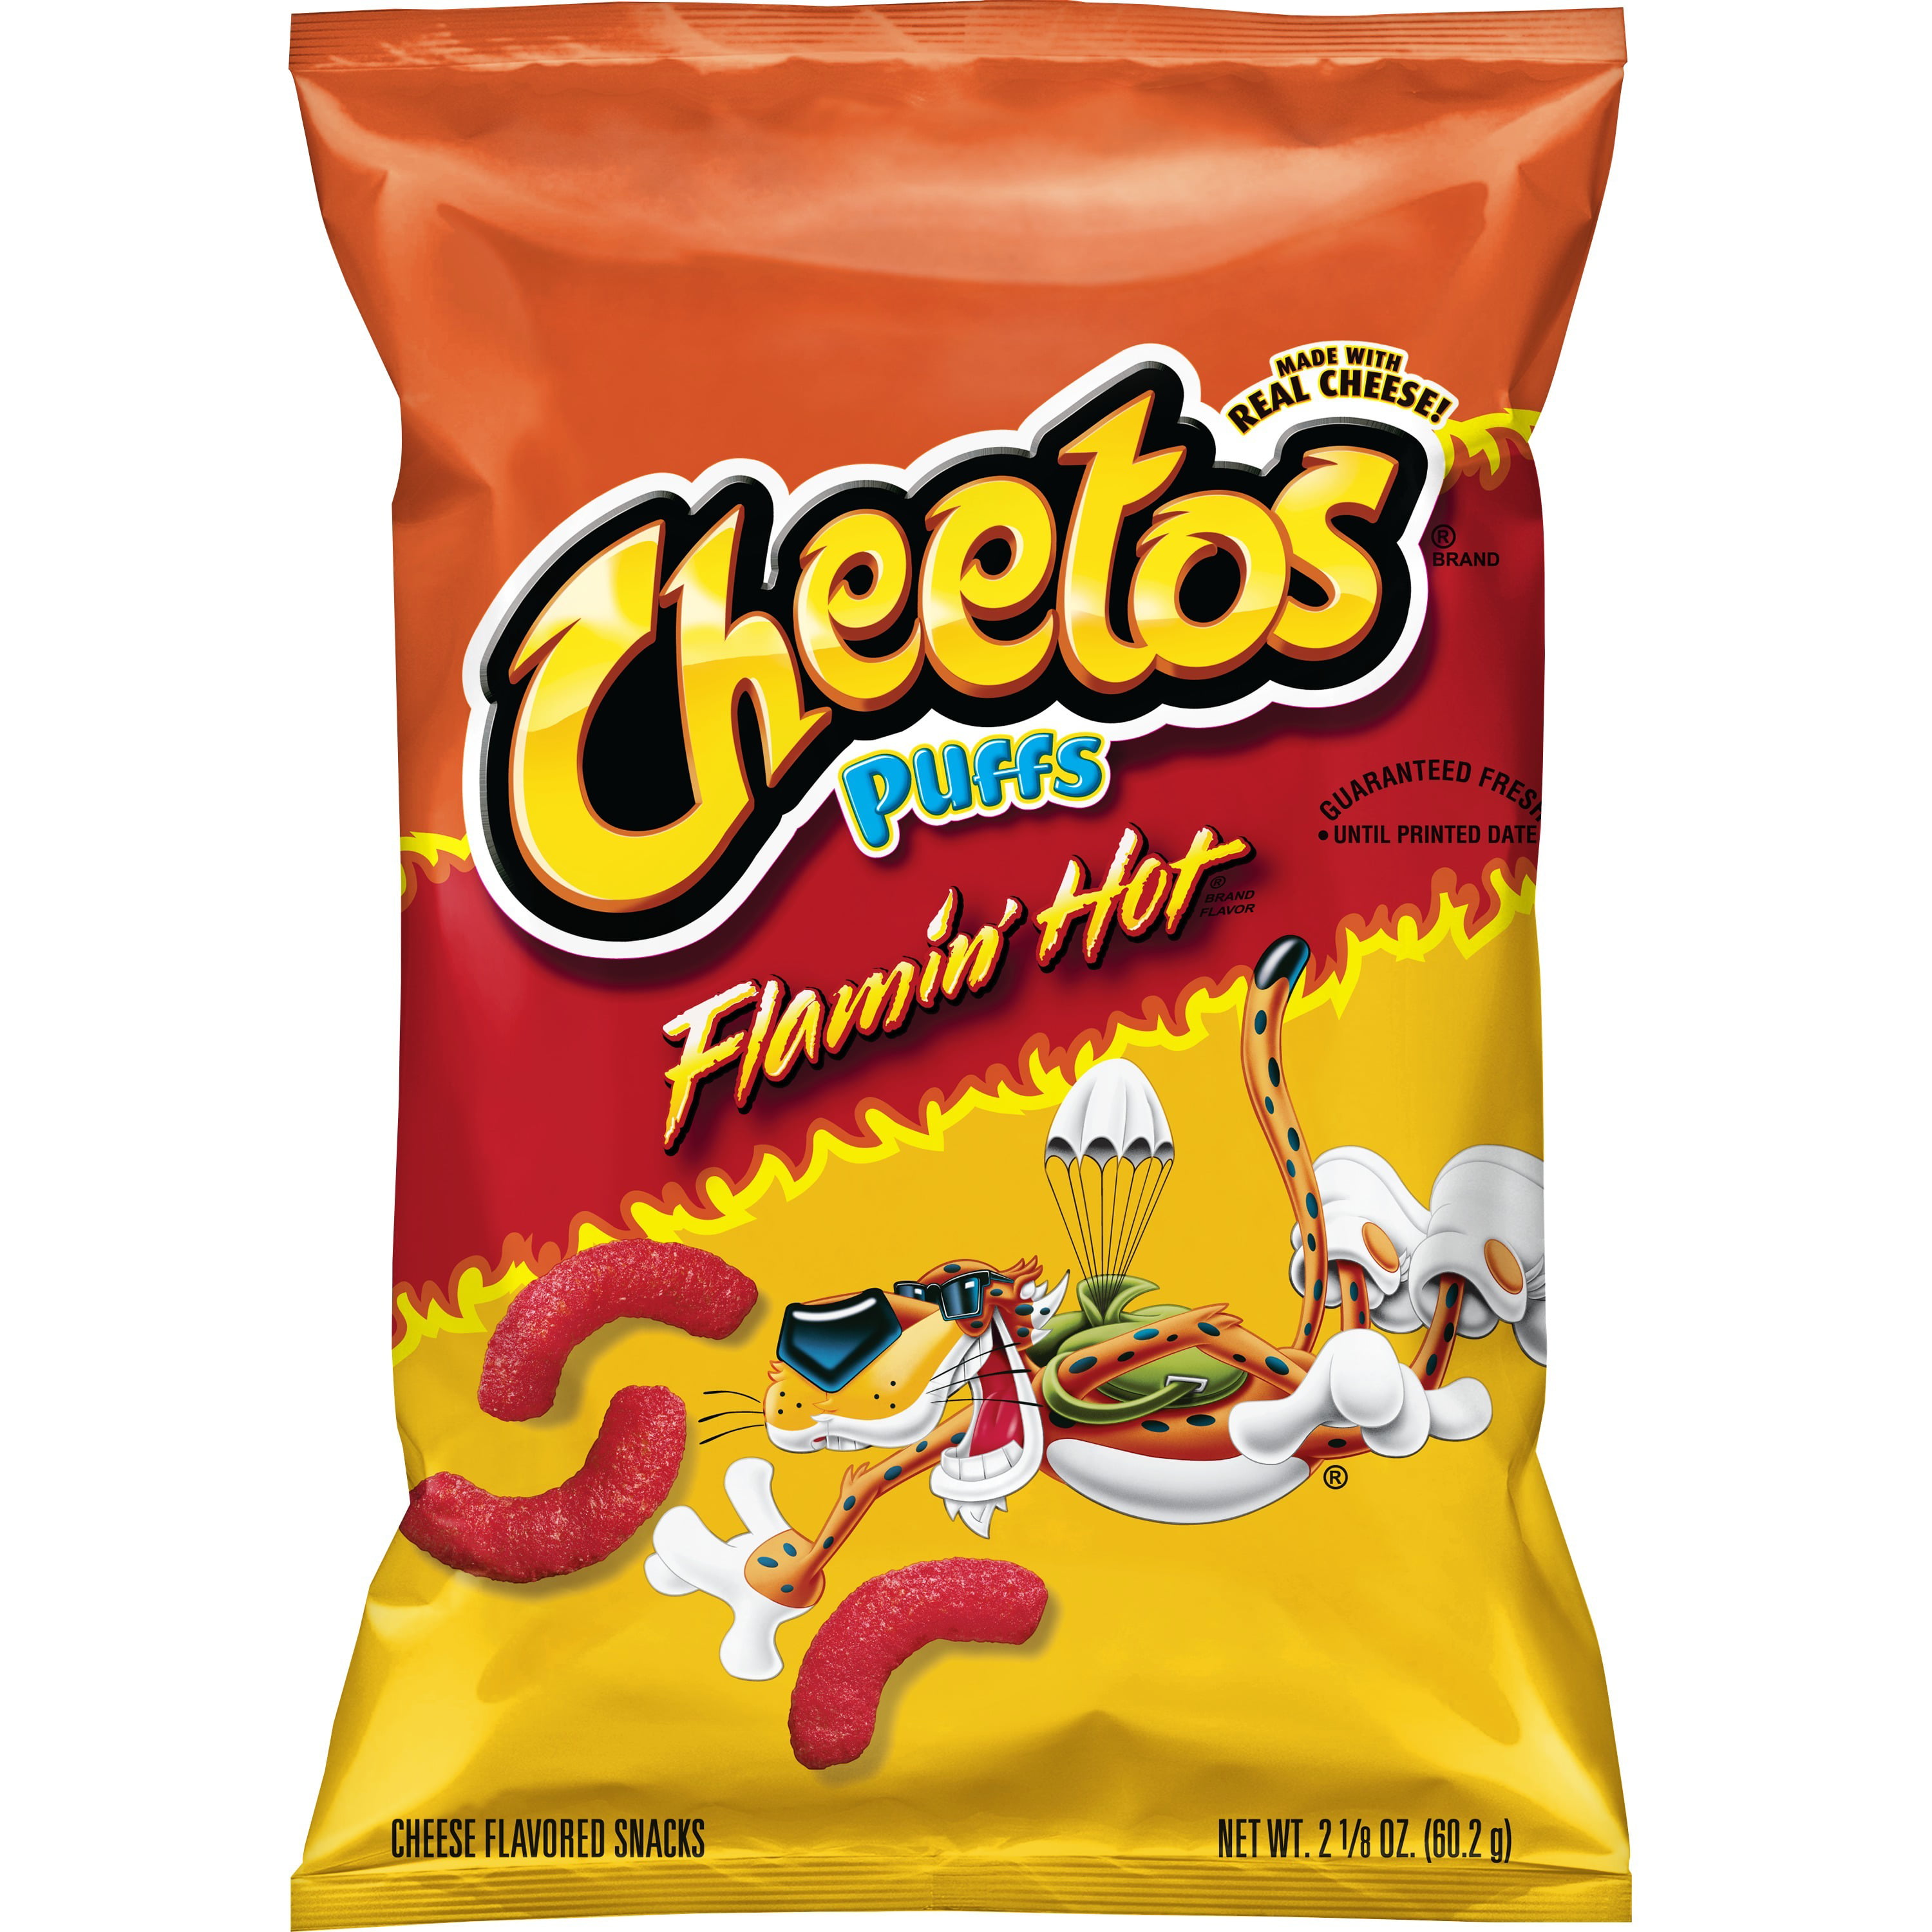 Cheetos Puffs Flamin Hot Cheese Flavored Snacks 2 125 Oz Bag Walmart Com Wa...